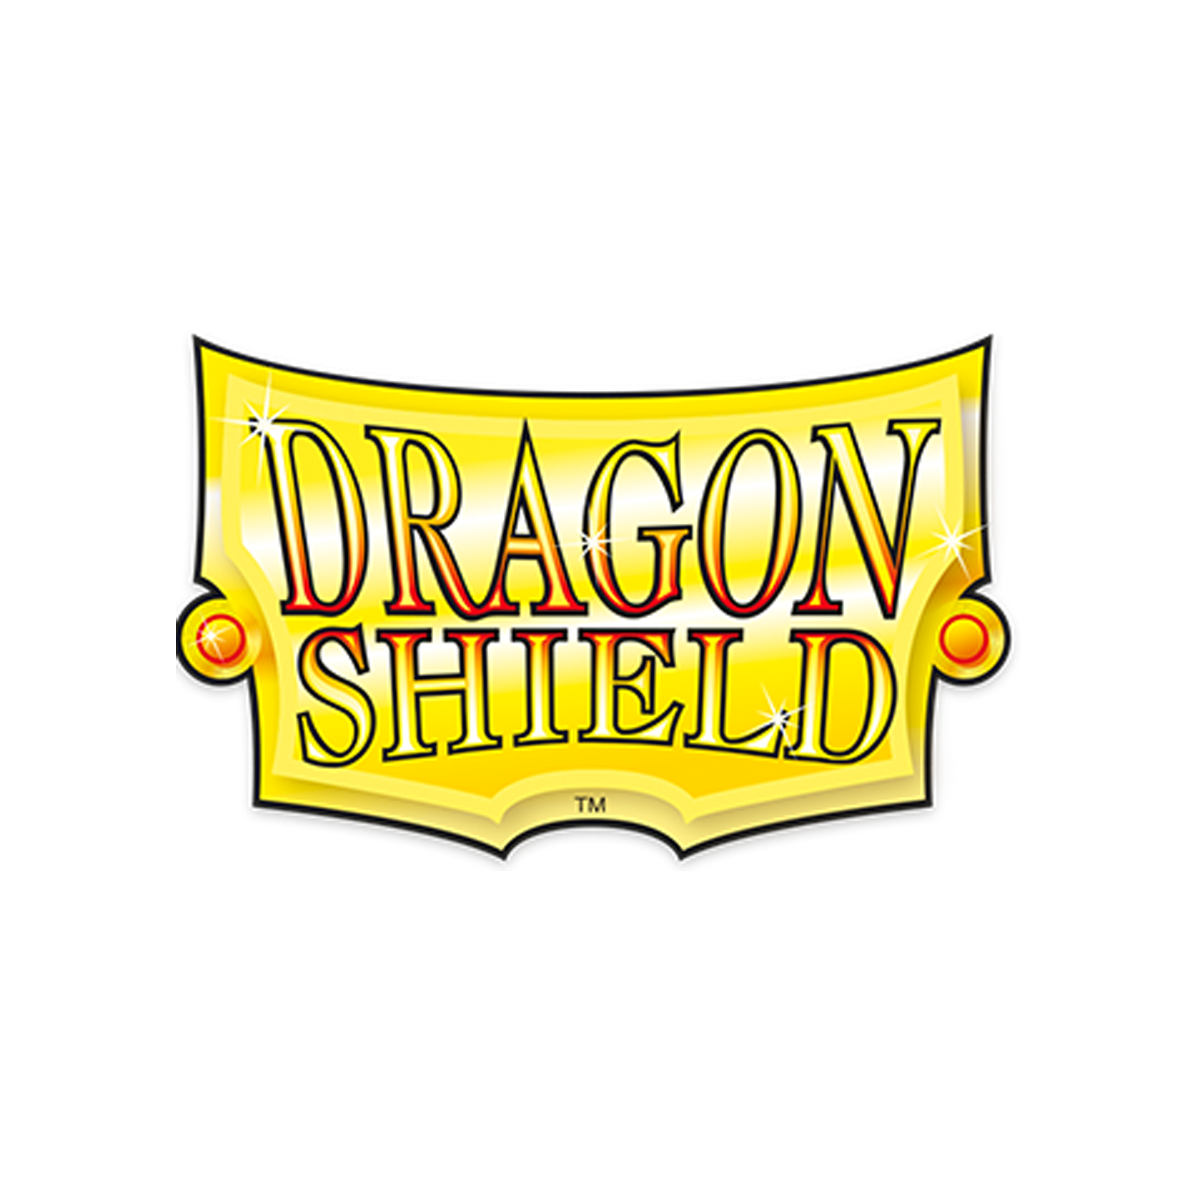 Brand: Dragon Shield